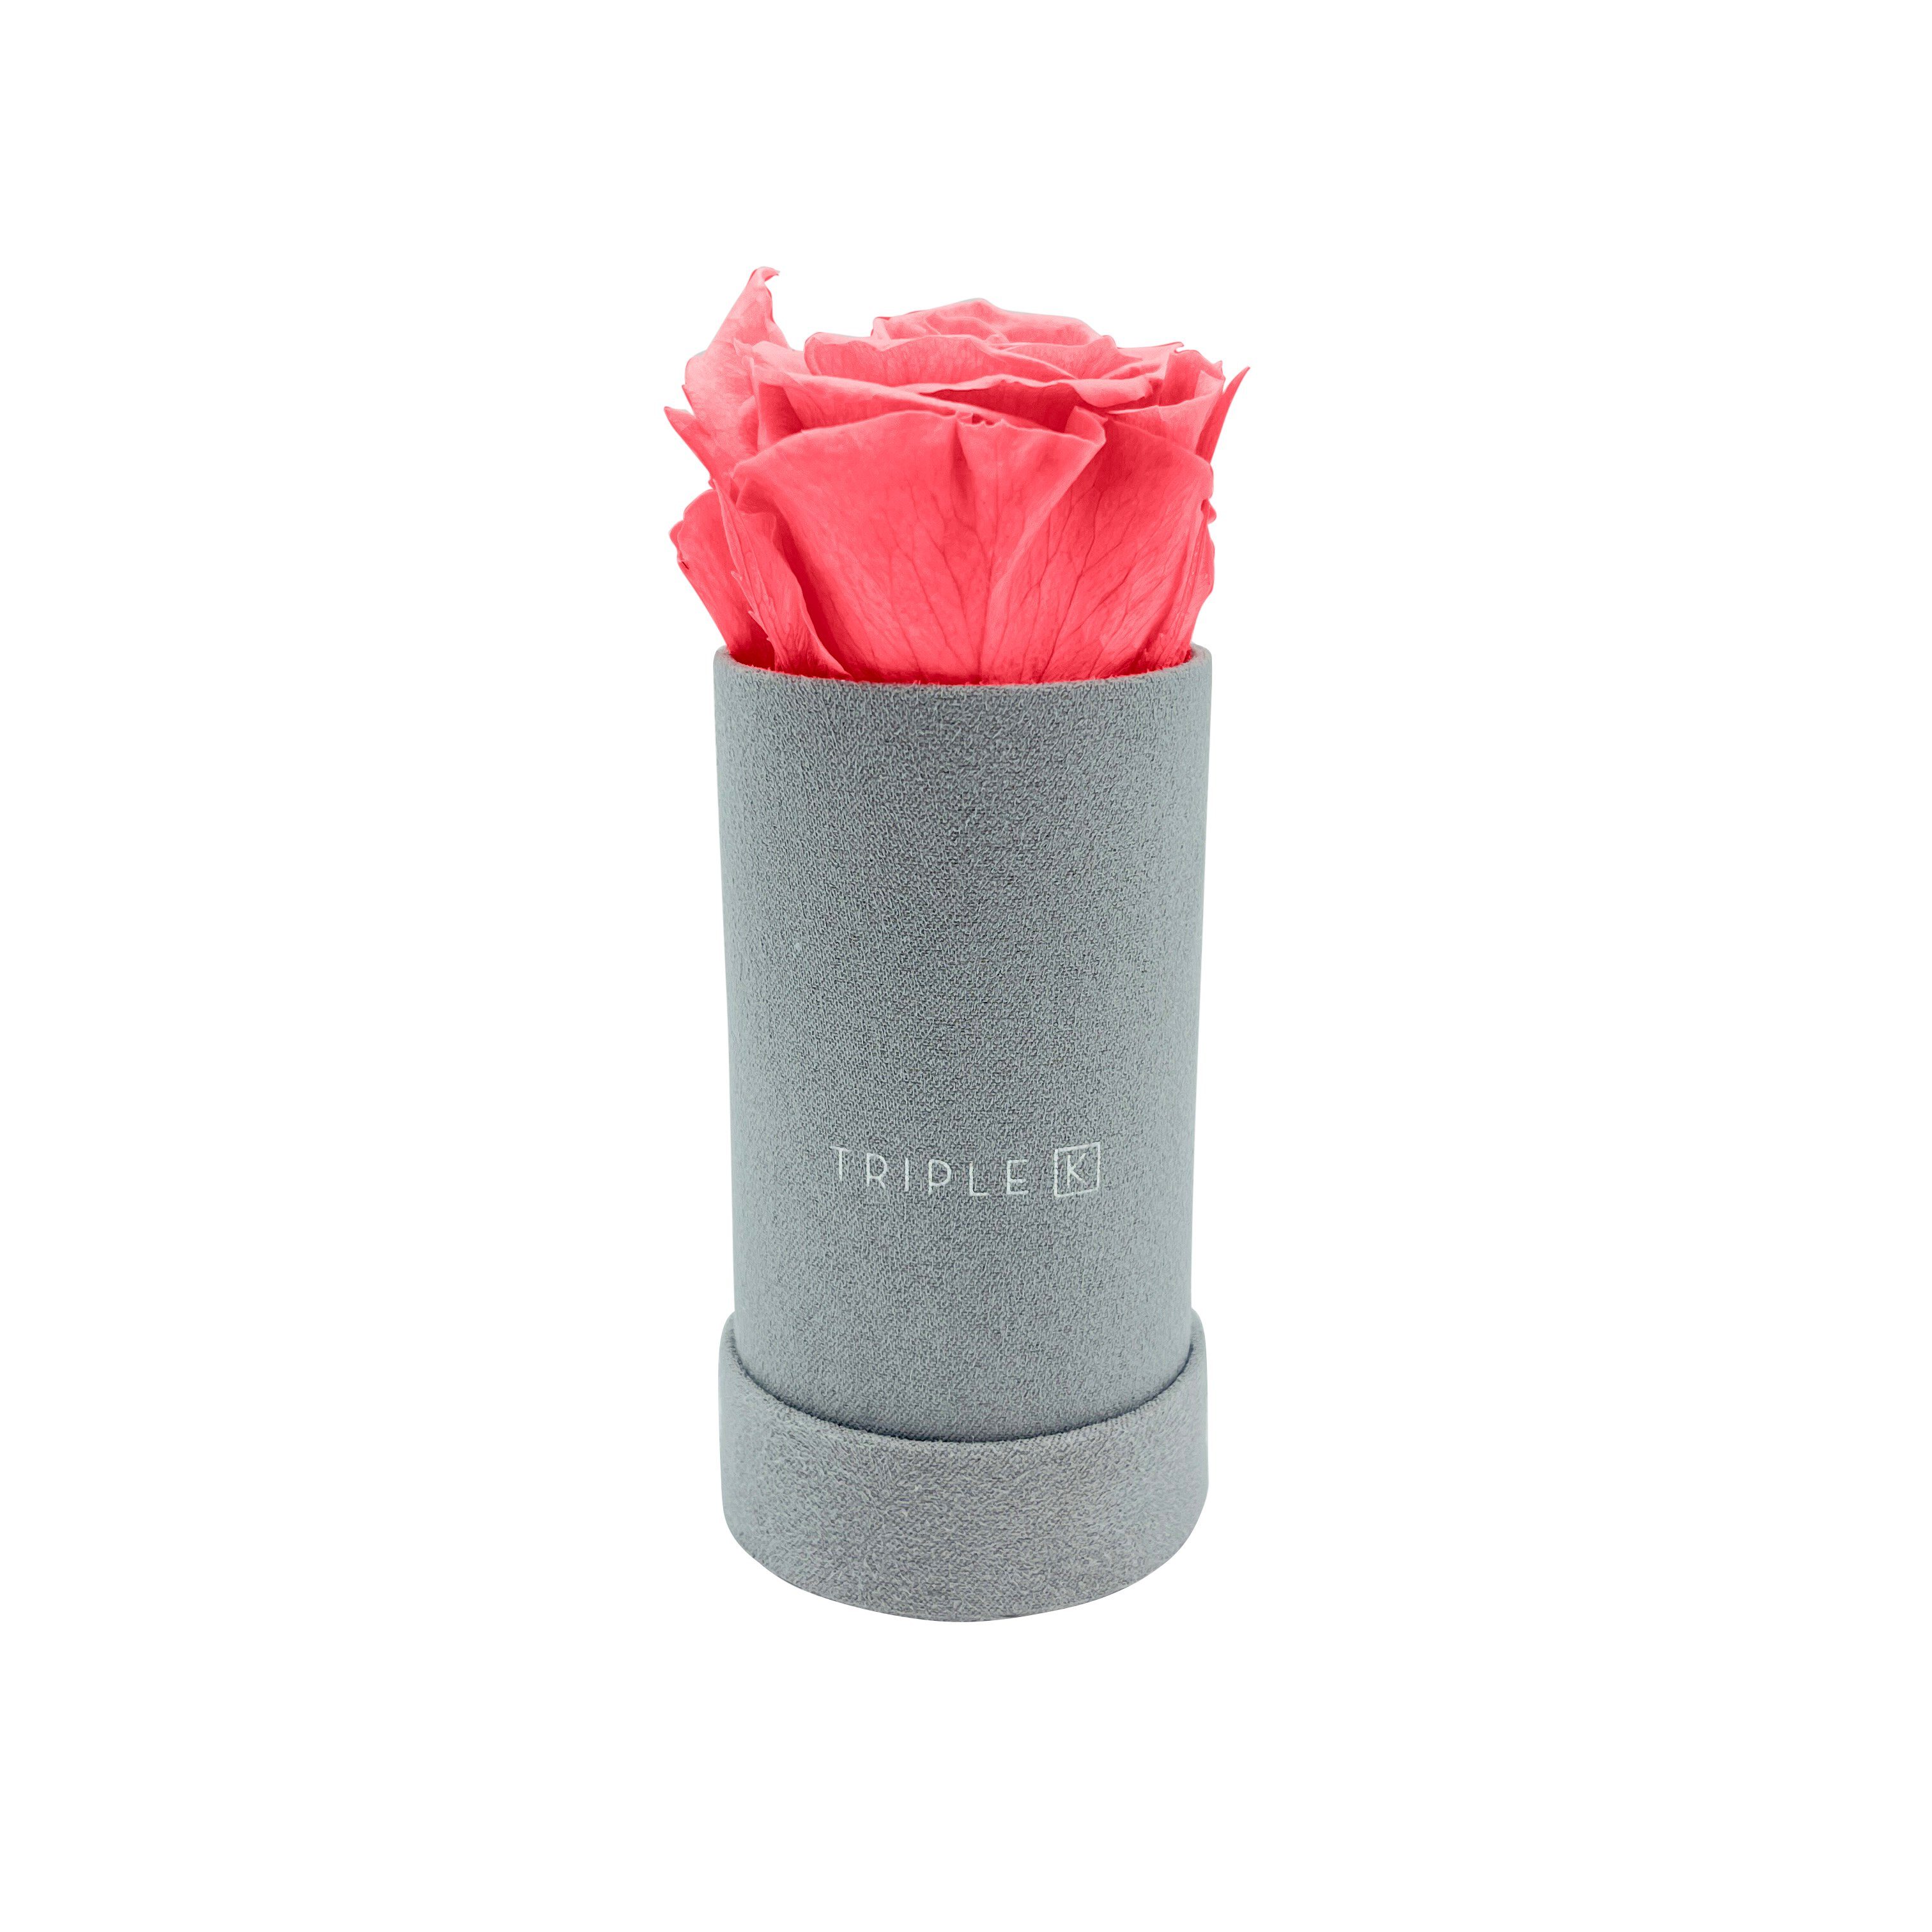 Kunstblume TRIPLE K - Rosenbox Velvet mit Infinity Rosen, bis 3 Jahre Haltbar, Flowerbox mit konservierten Rosen, Blumenbox Inkl. Grußkarte Infinity Rose, TRIPLE K Rosa